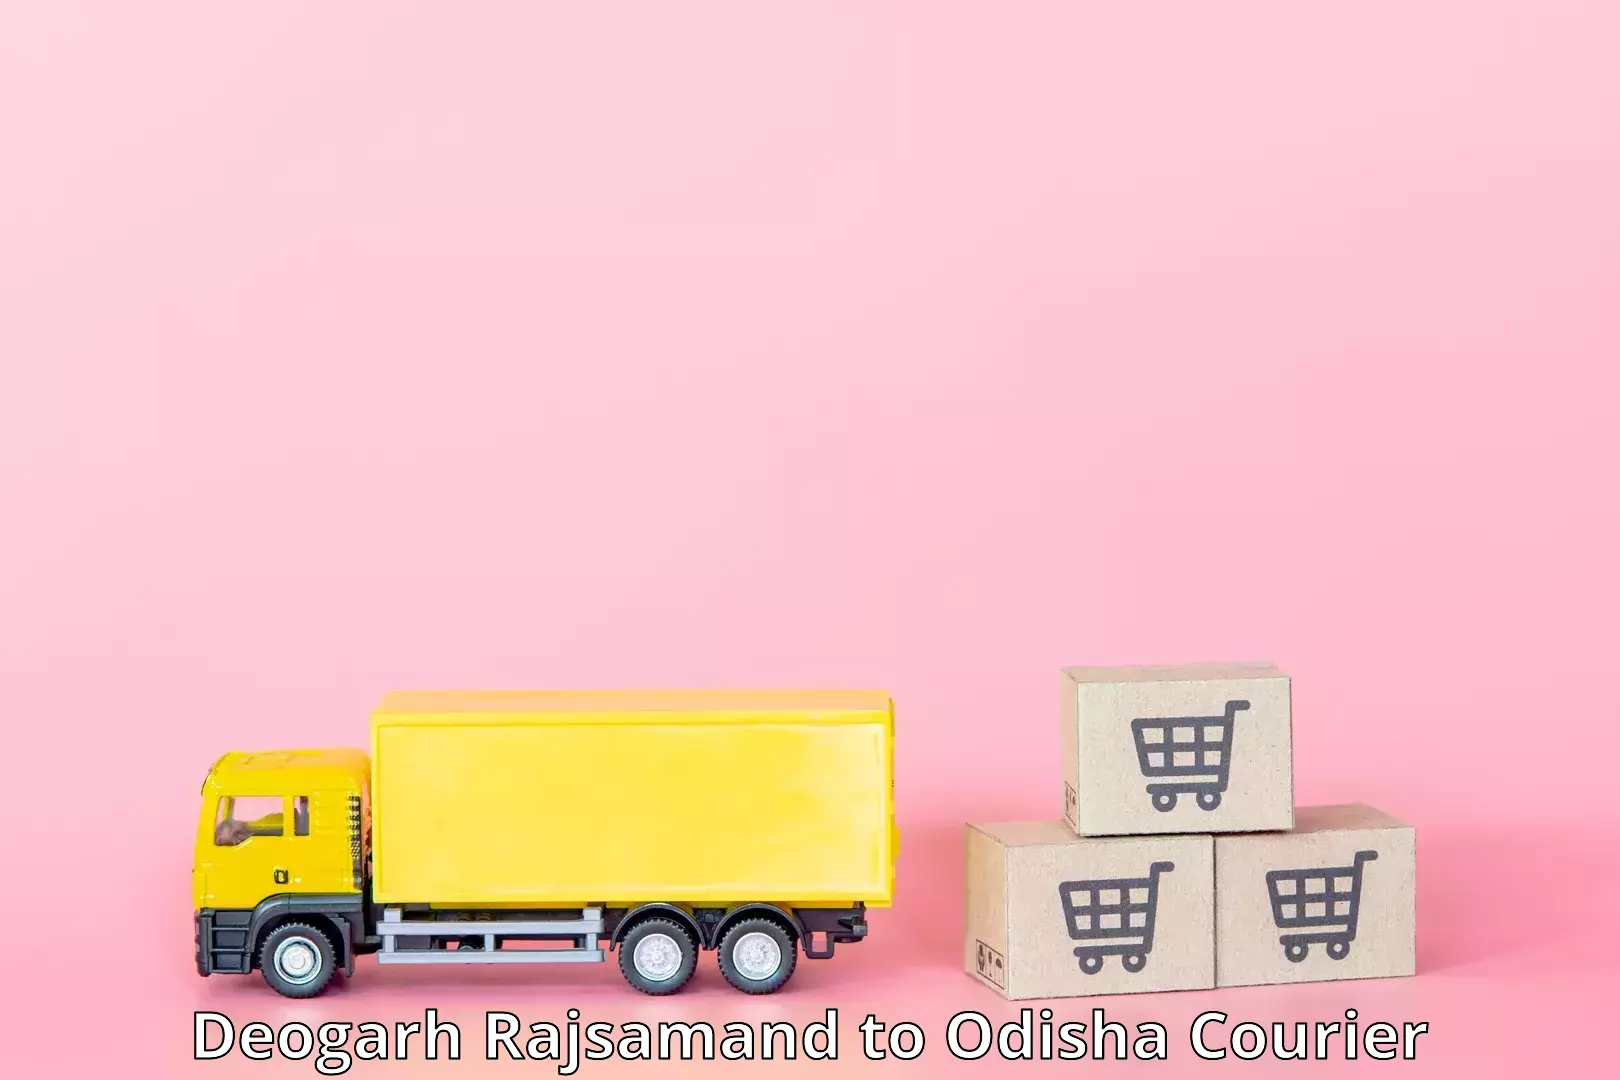 User-friendly delivery service Deogarh Rajsamand to Odisha